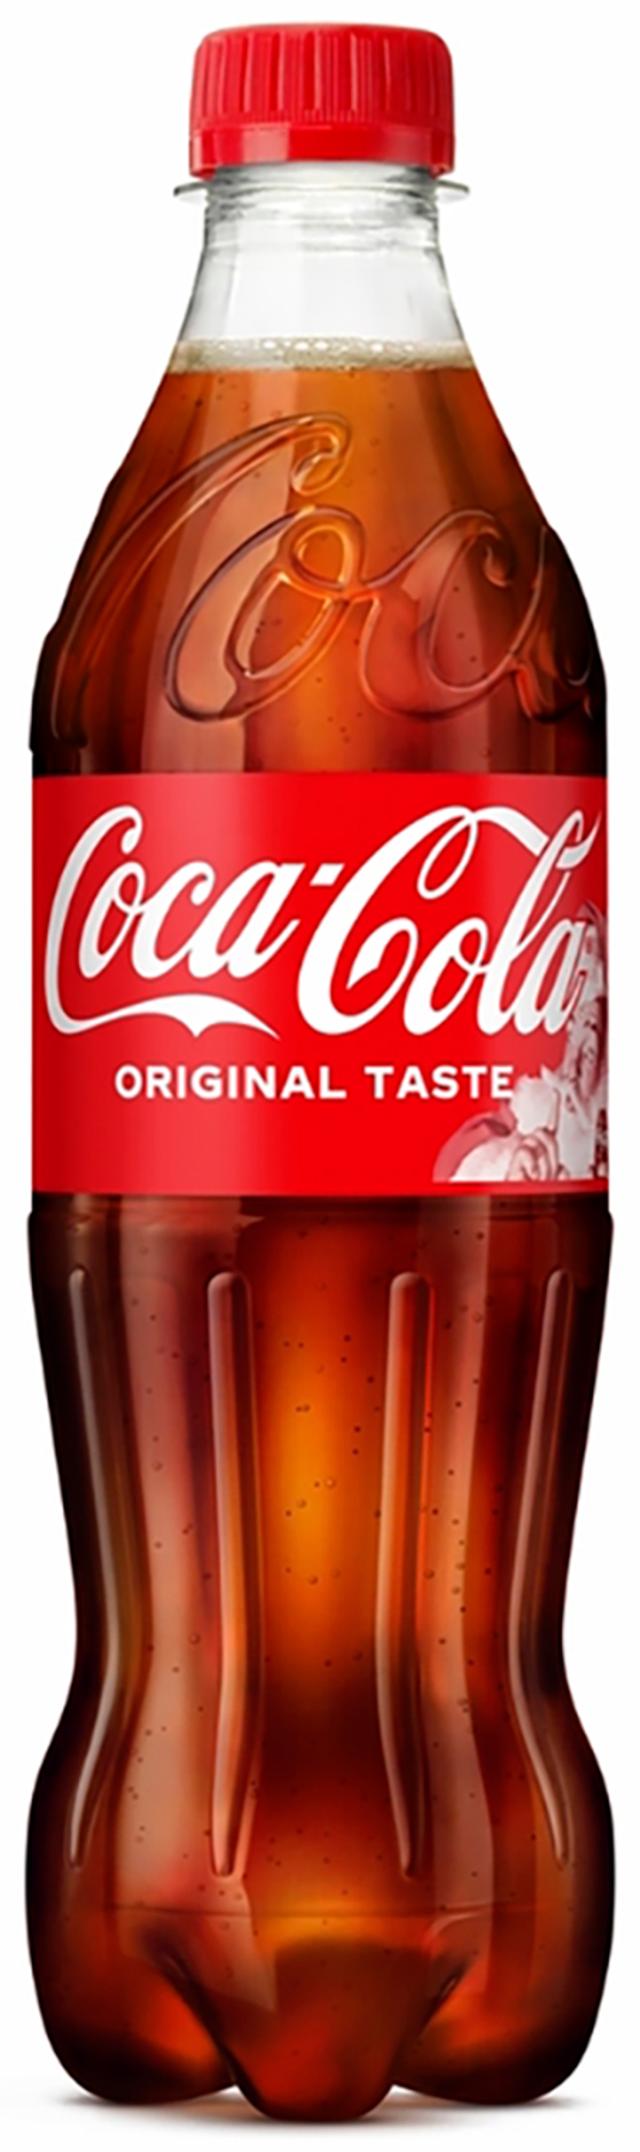 Coca-Cola Original Taste virvoitusjuoma muovipullo 0,5 L